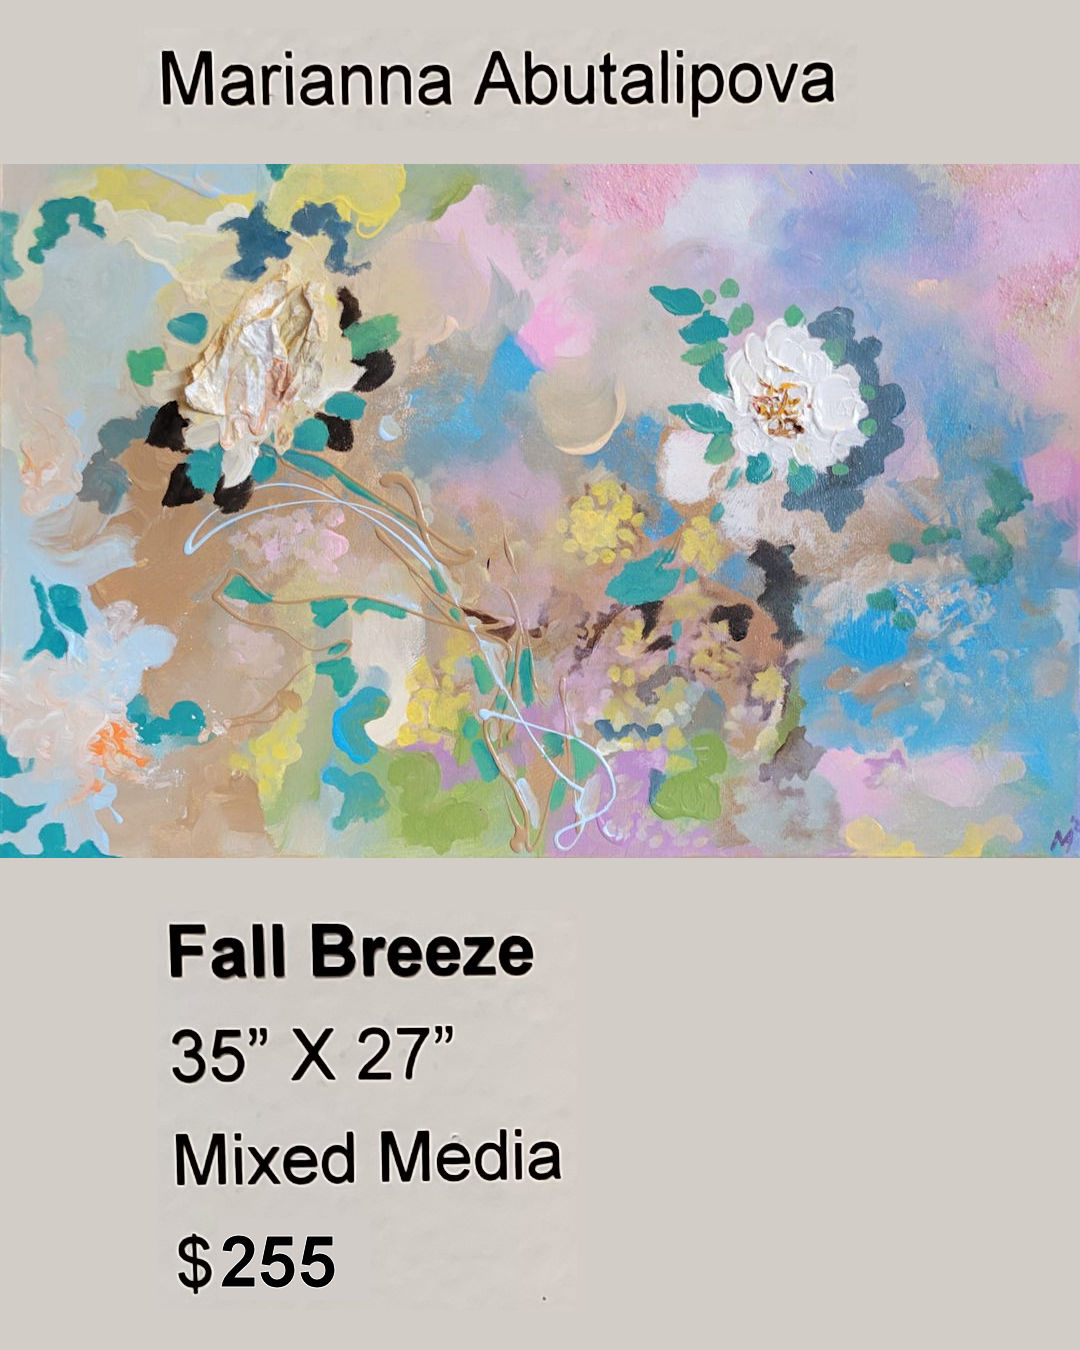 Fall Breeze â€” Marianna Abutalipova